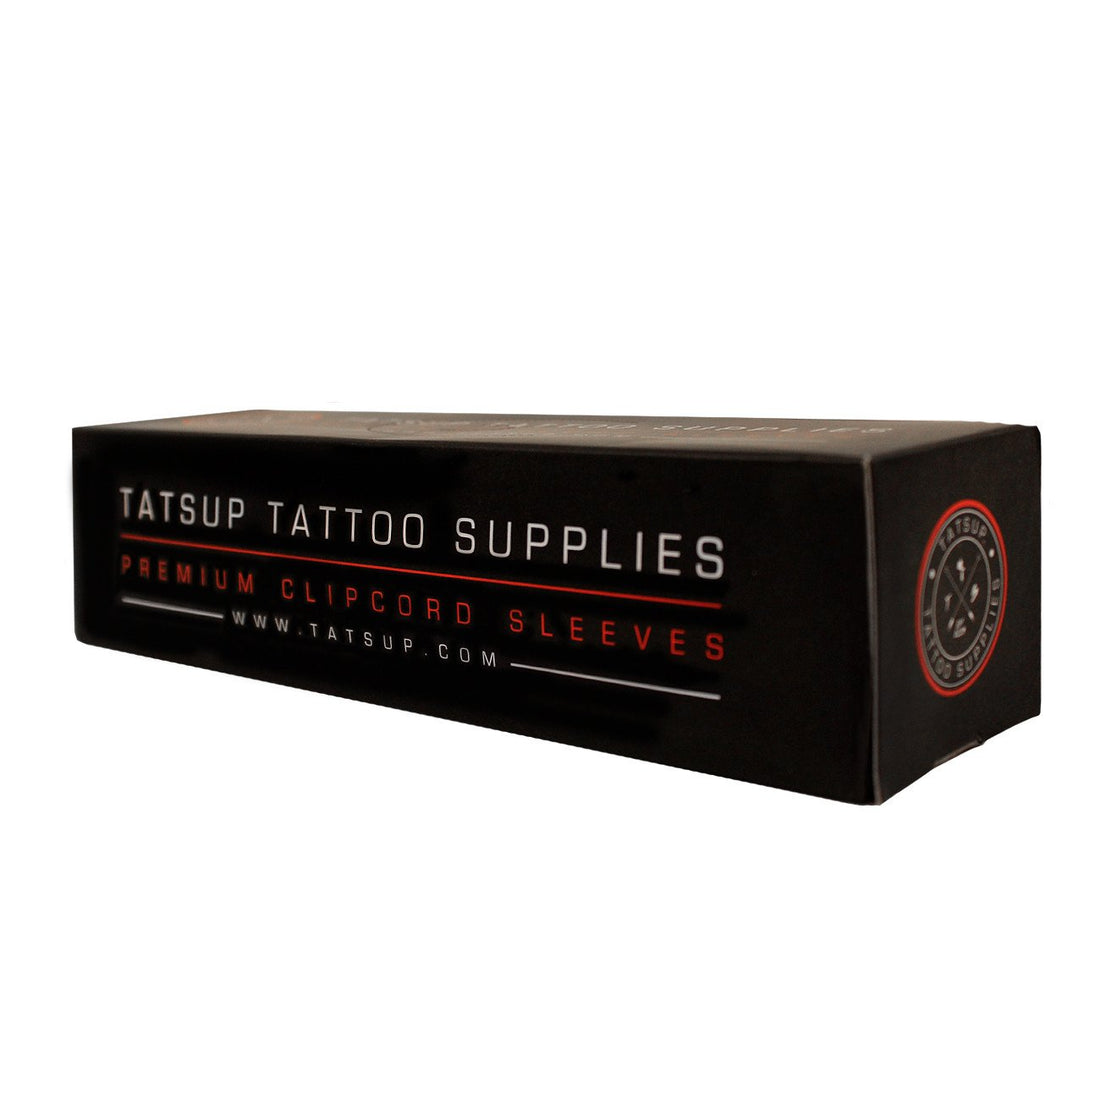 Tatsup Premium Clipcord Sleeves Studio Supplies Tatsup 